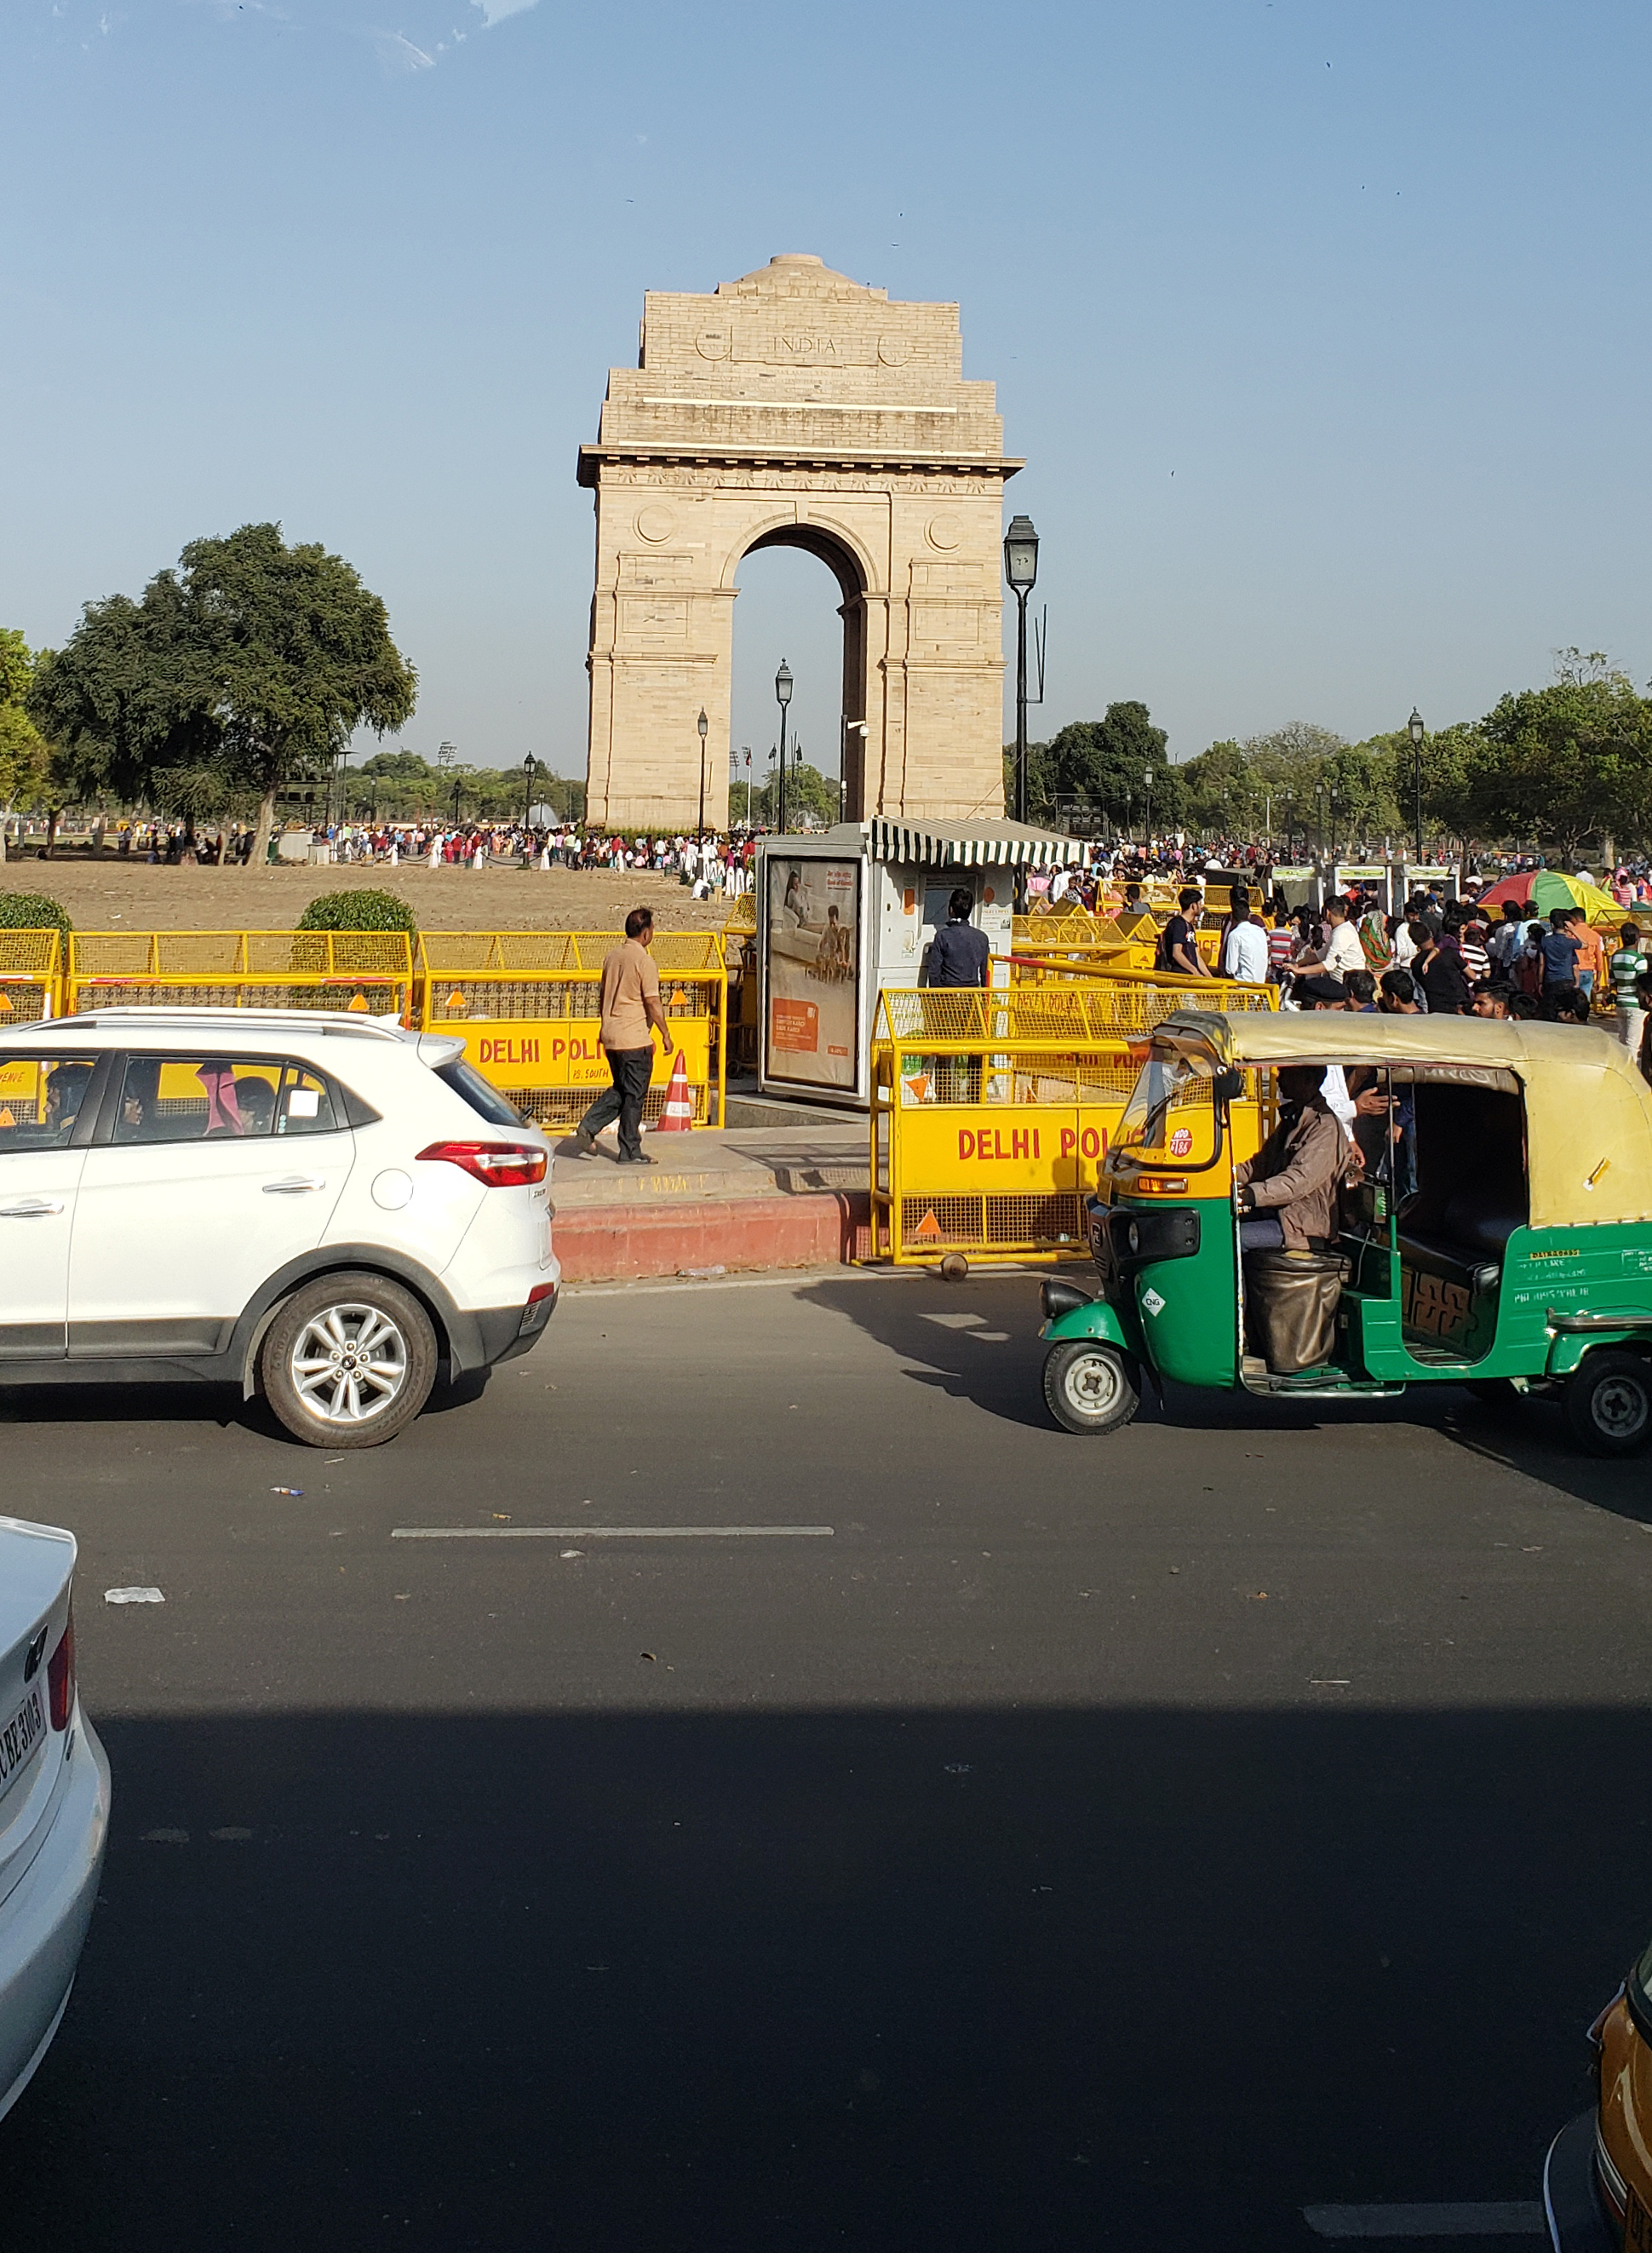 Two_Days_in_Delhi_Indias_Capital_City